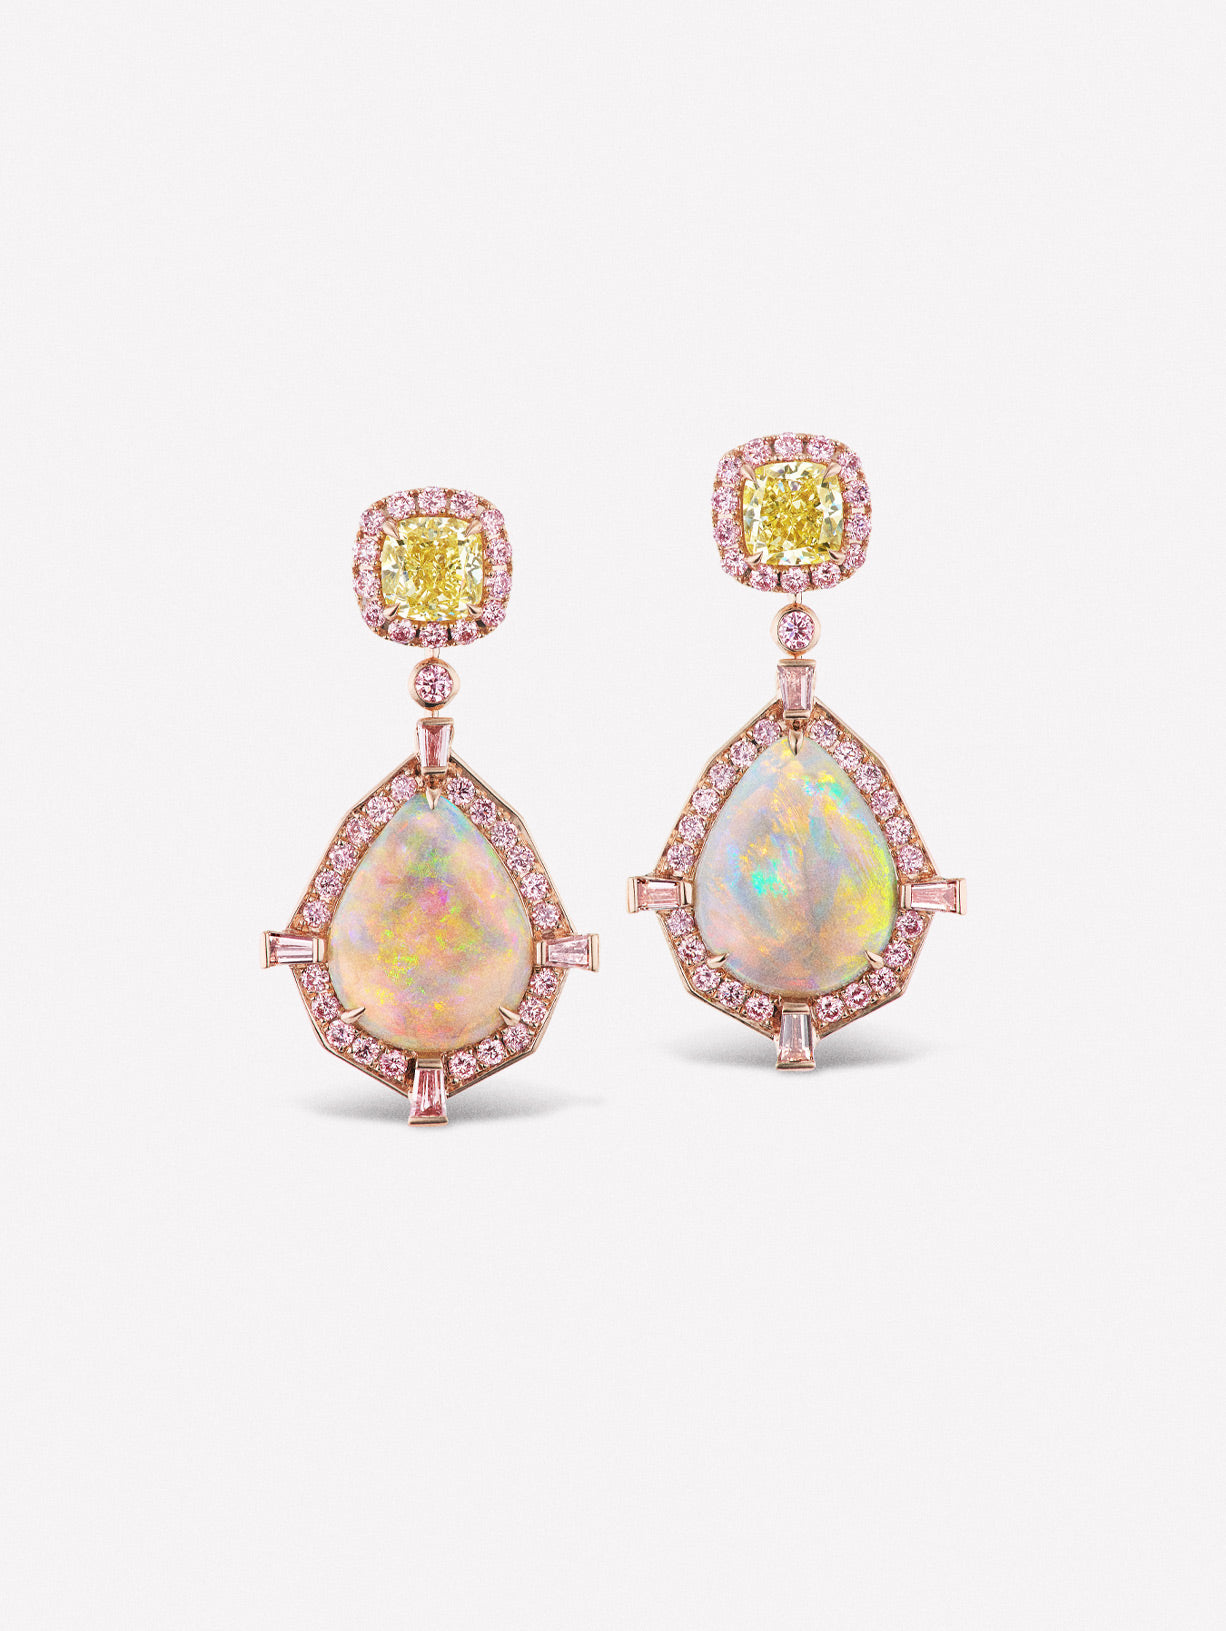 Argyle Pink™ Diamond and Opal Drop Earrings - Pink Diamonds, J FINE - J Fine, Earrings - Pink Diamond Jewelry, argyle-pink™-diamond-and-opal-drop-earrings-by-j-fine - Argyle Pink Diamonds